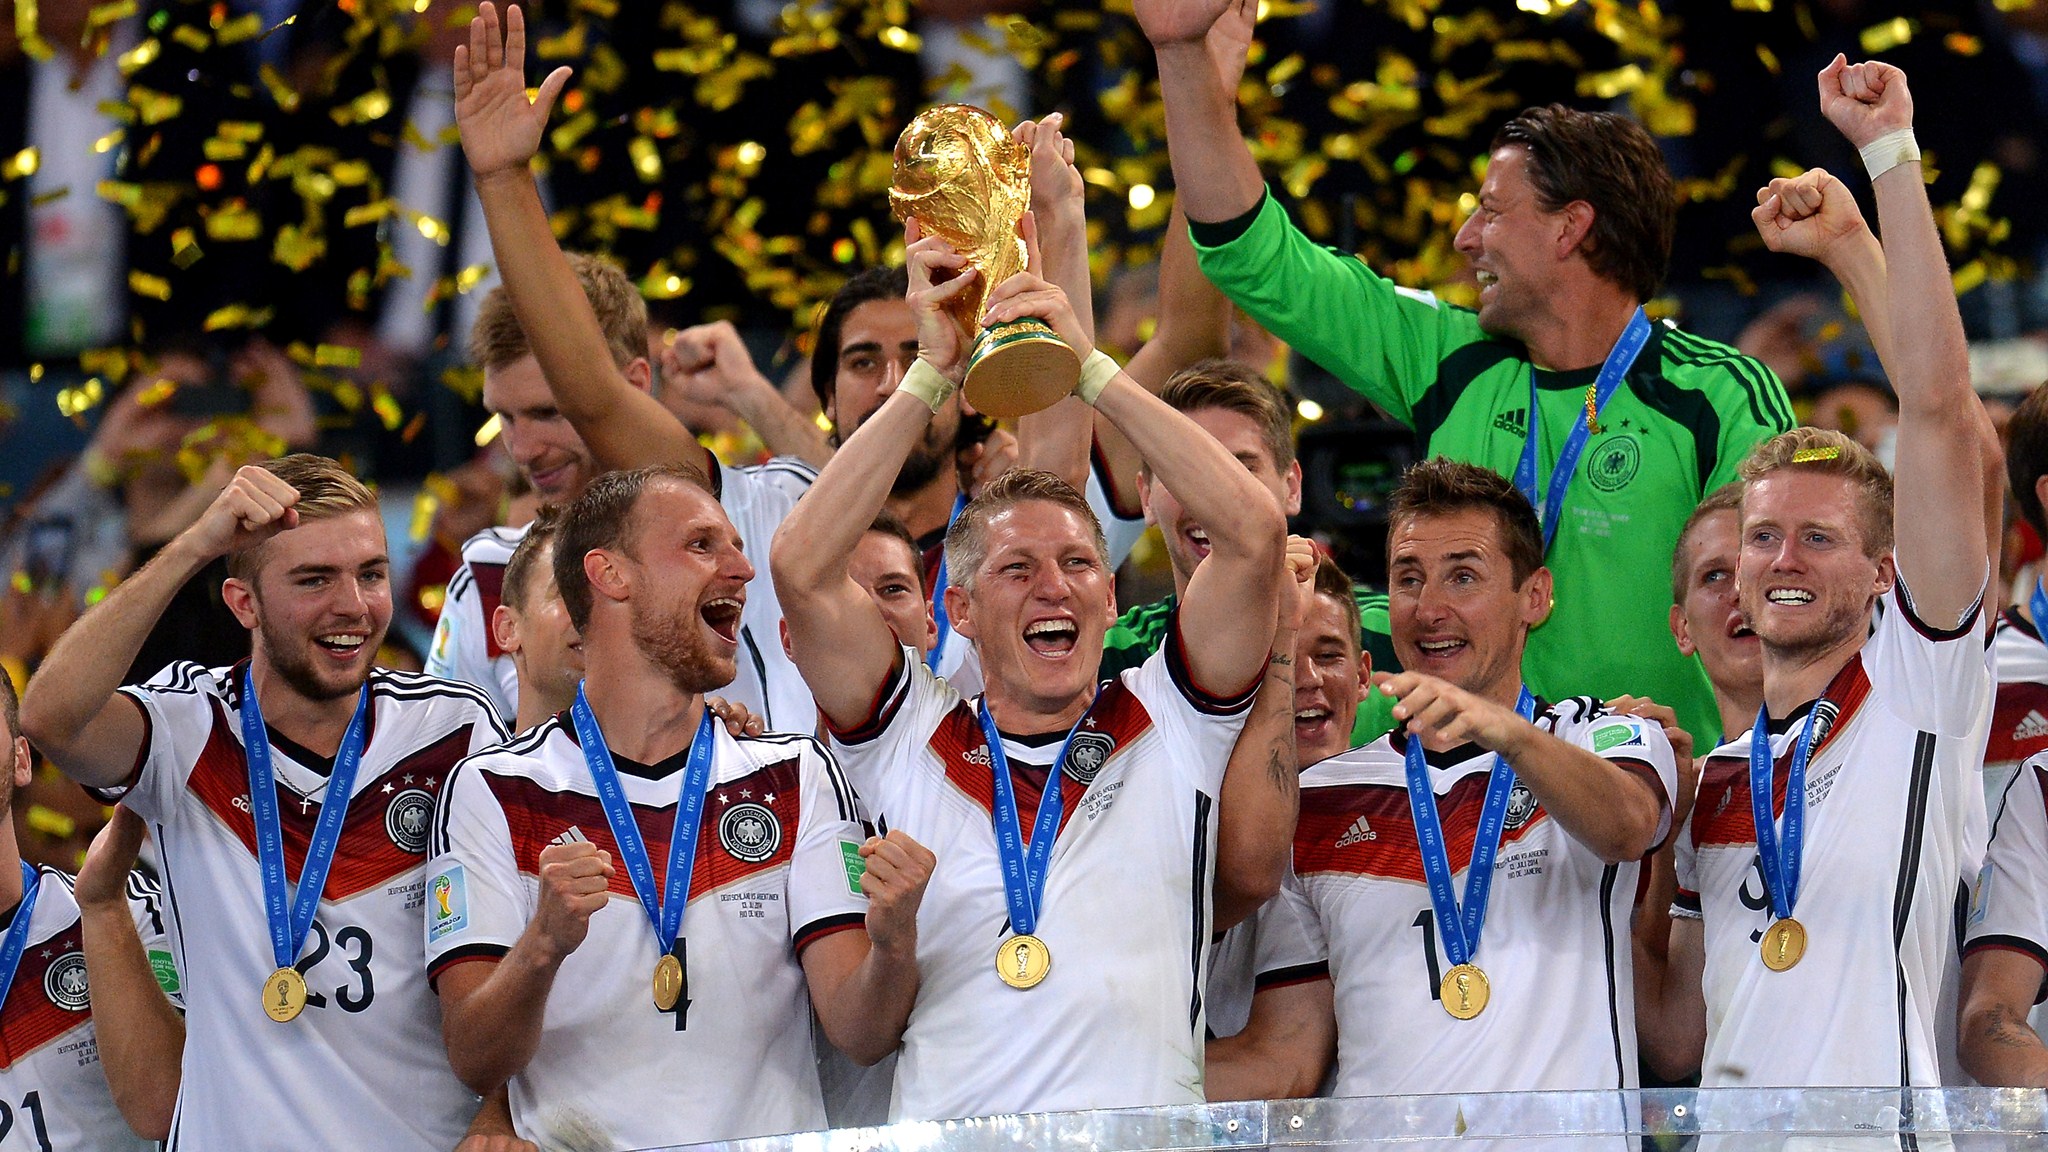 Catatan Tentang Kemenangan Jerman Di Piala Dunia 2014 Antara